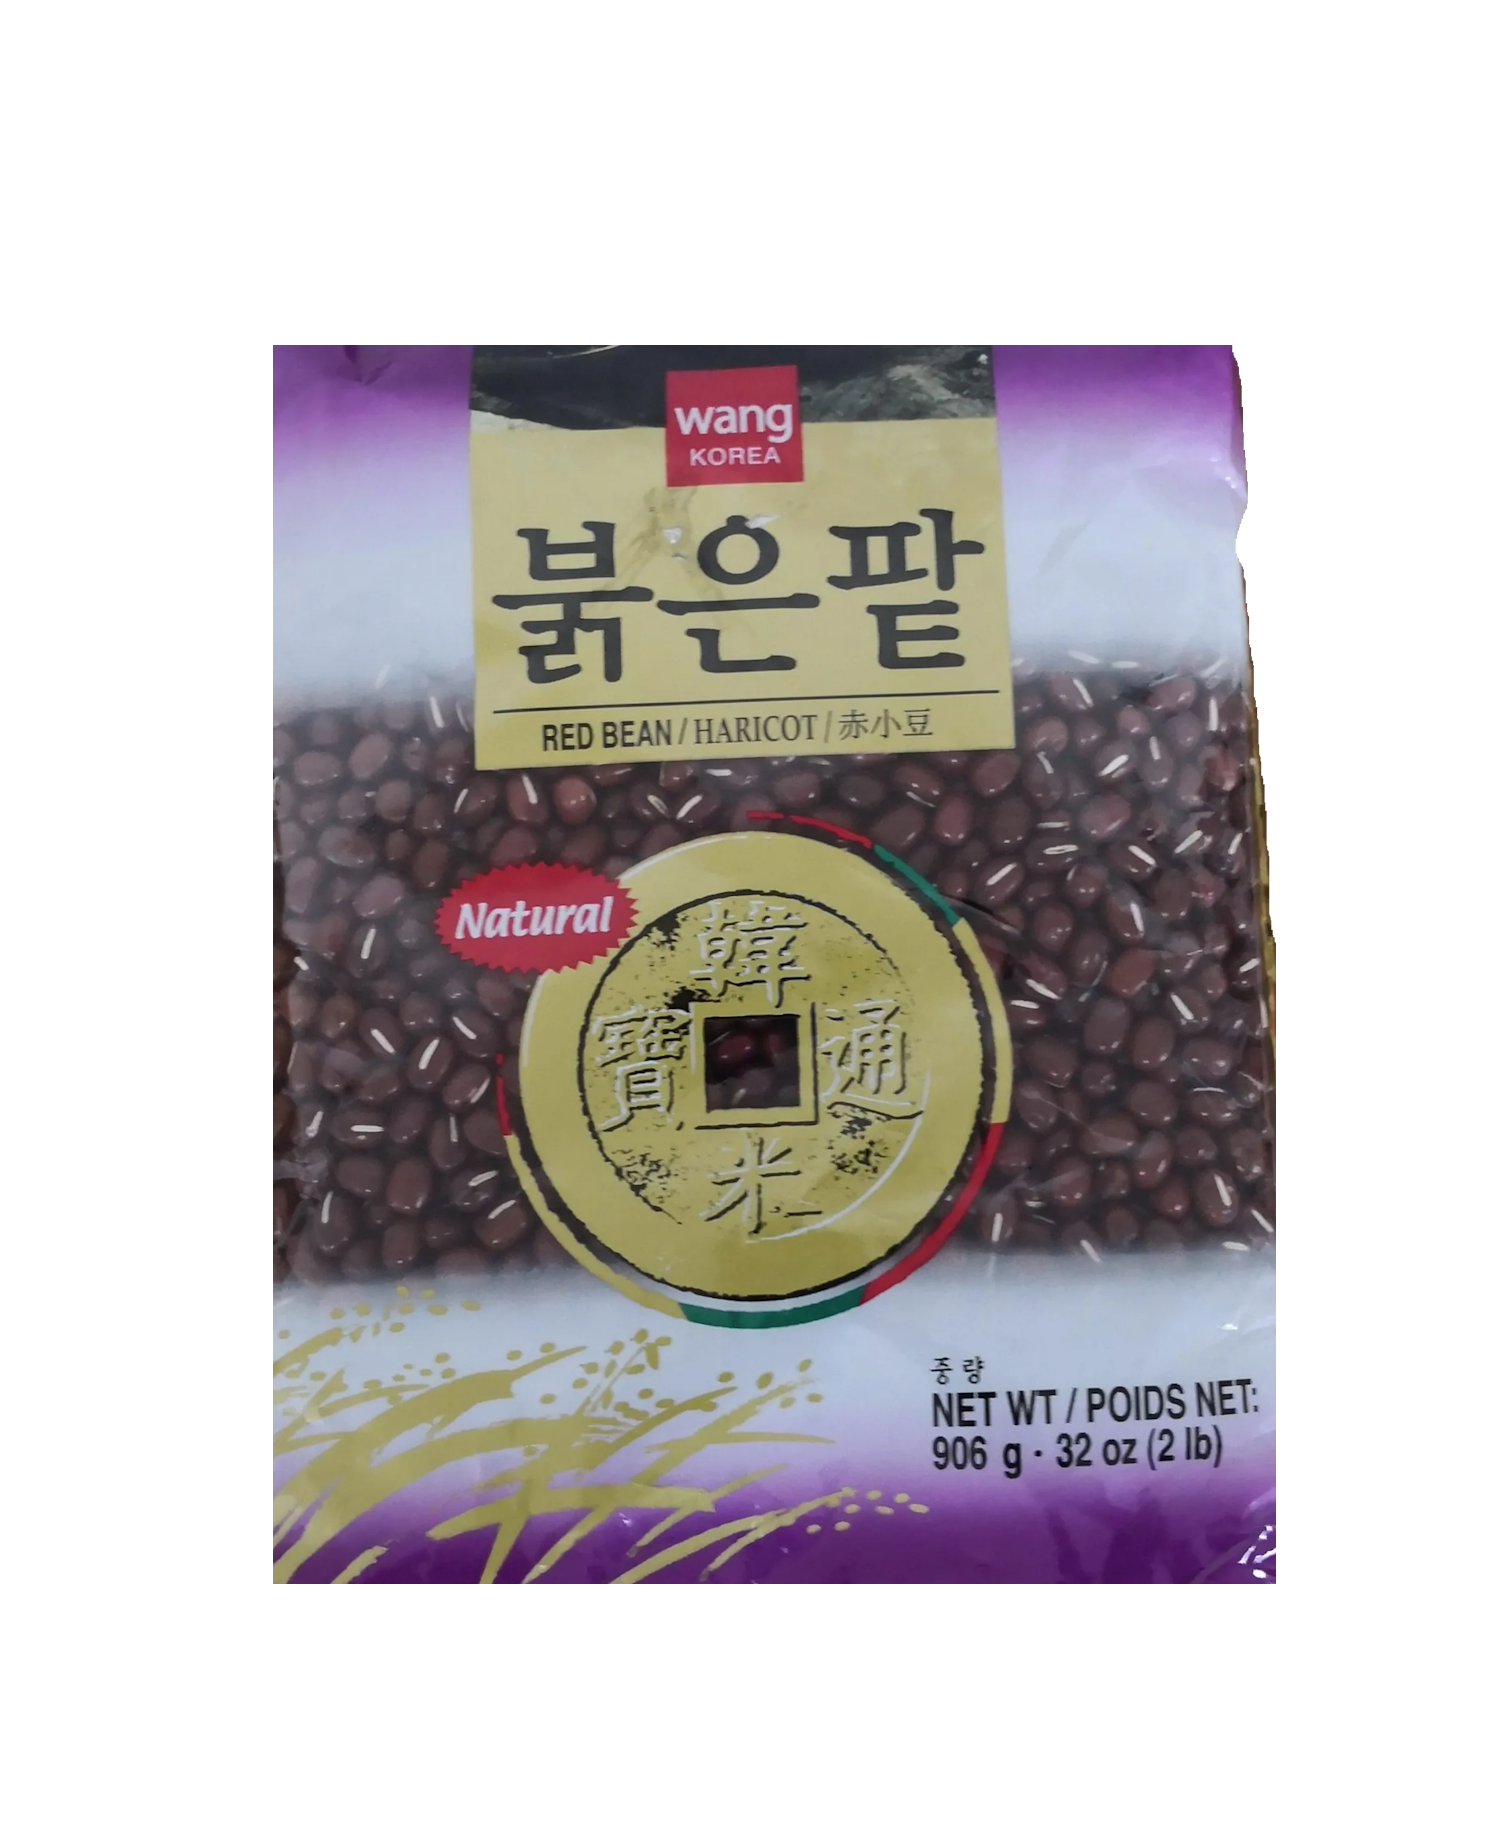 Wang Korea Red Bean 2lb